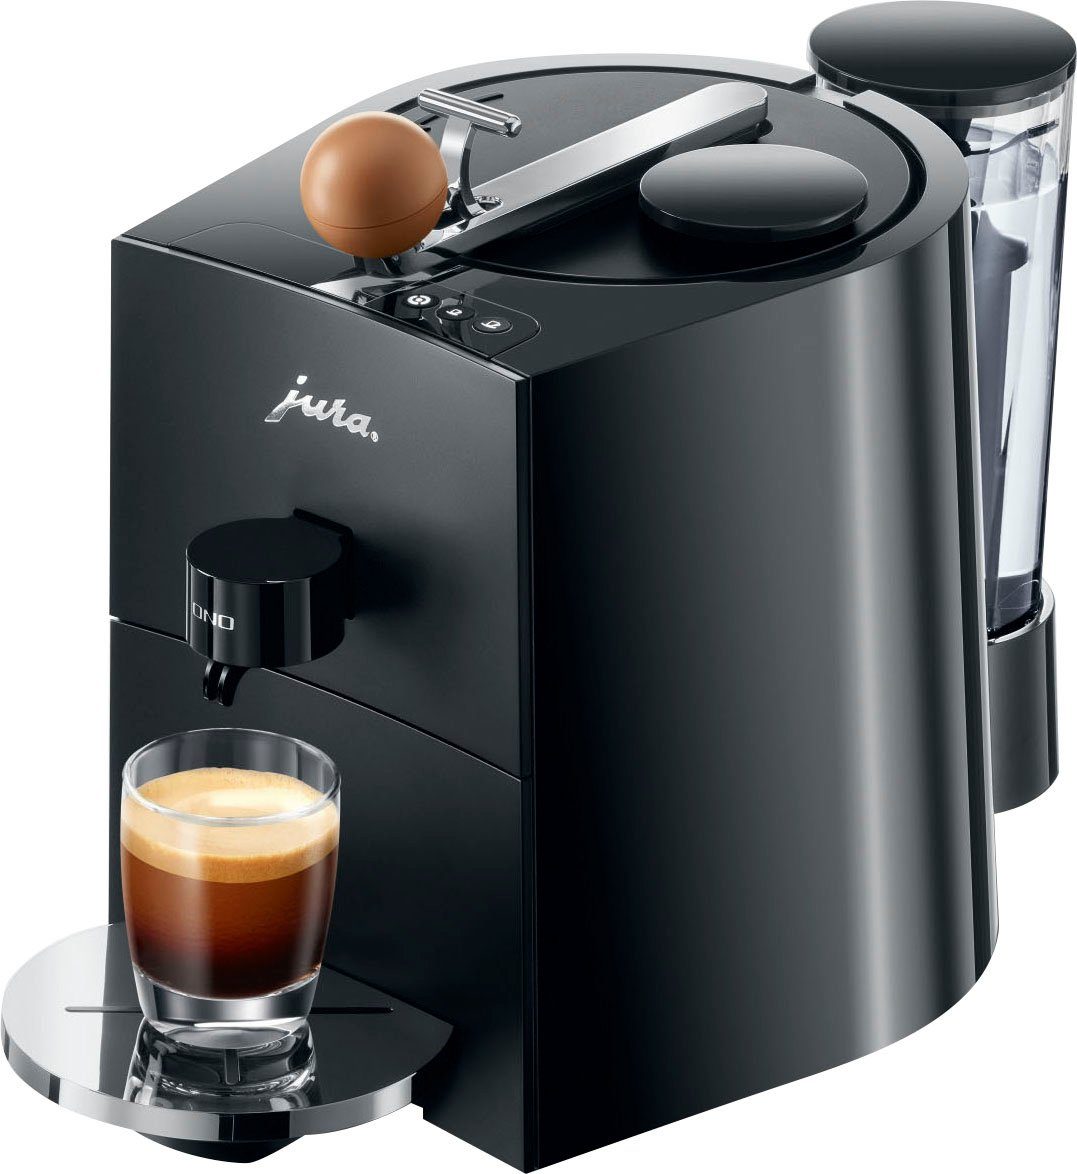 JURA 15505 ONO, Kaffeehalbautomat Espressomaschine